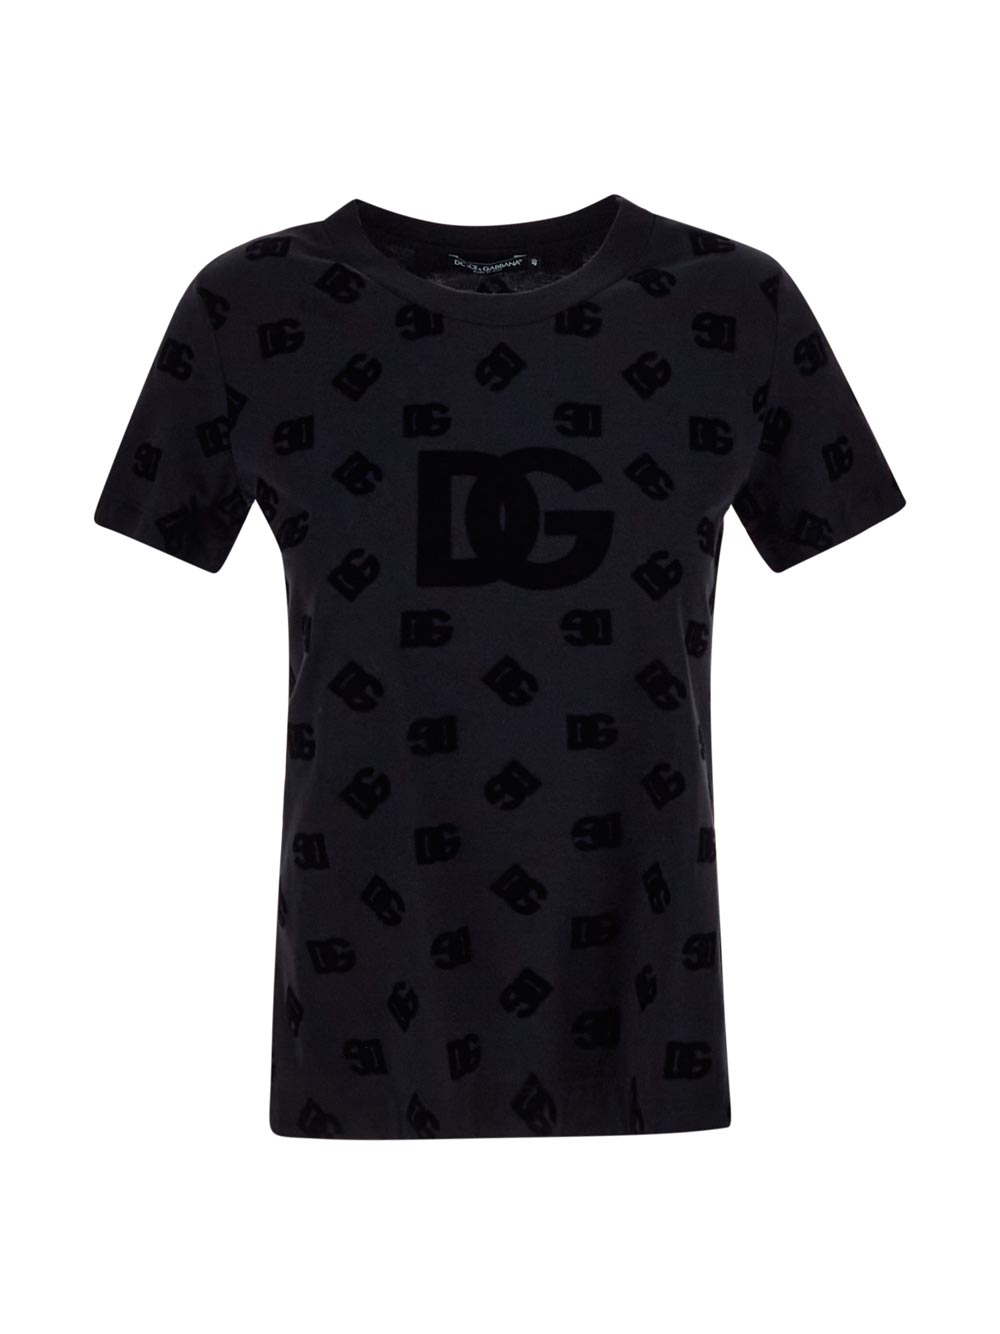 Dolce & Gabbana Logo-Print Cotton T-Shirt